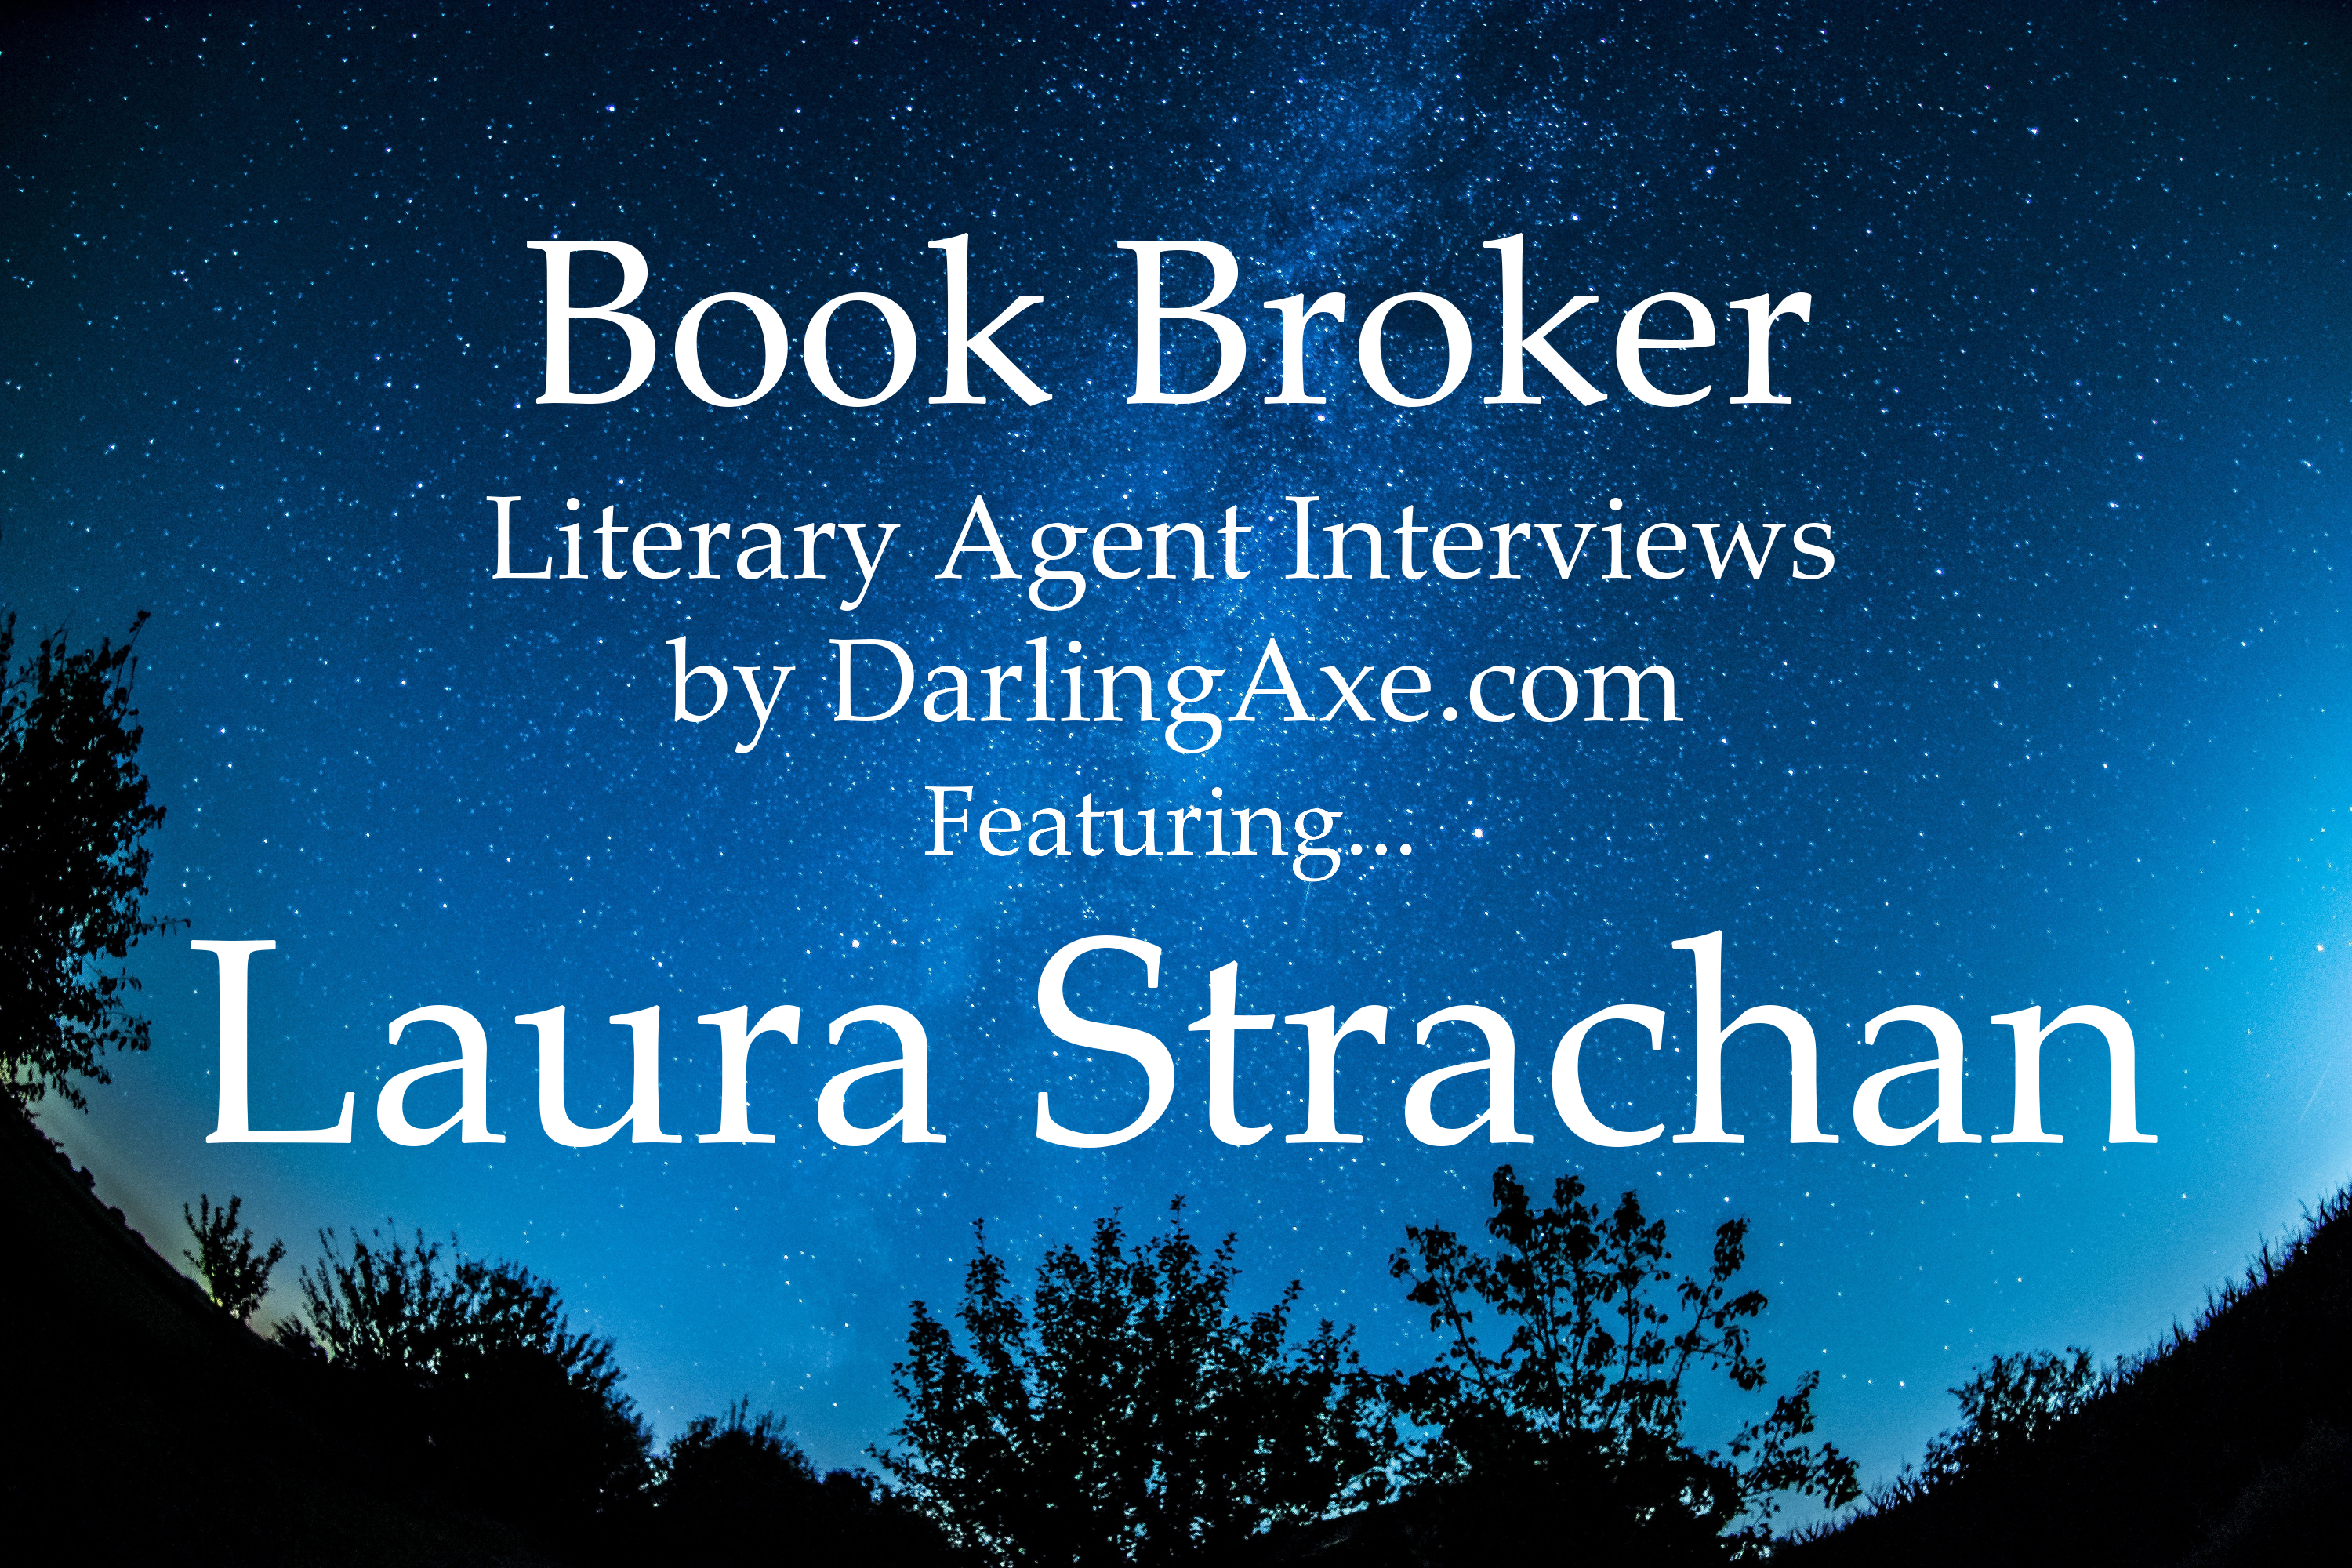 Book Broker: an interview with Laura Strachan